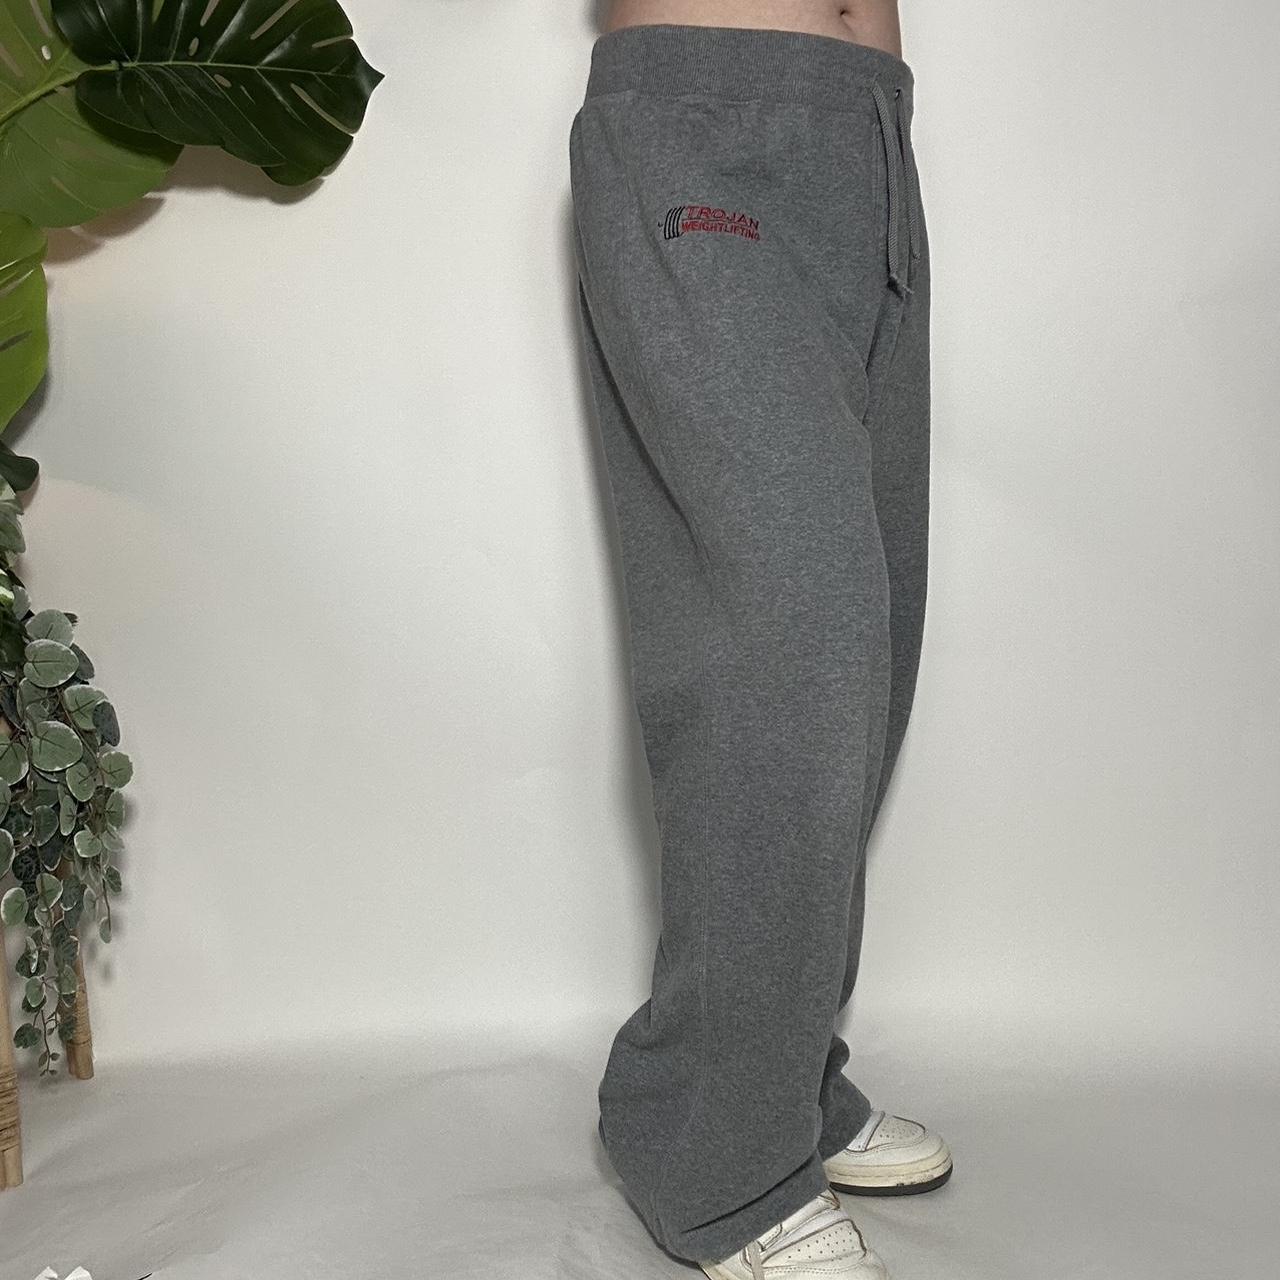 Vintage 90s Nike embroidered grey track pants